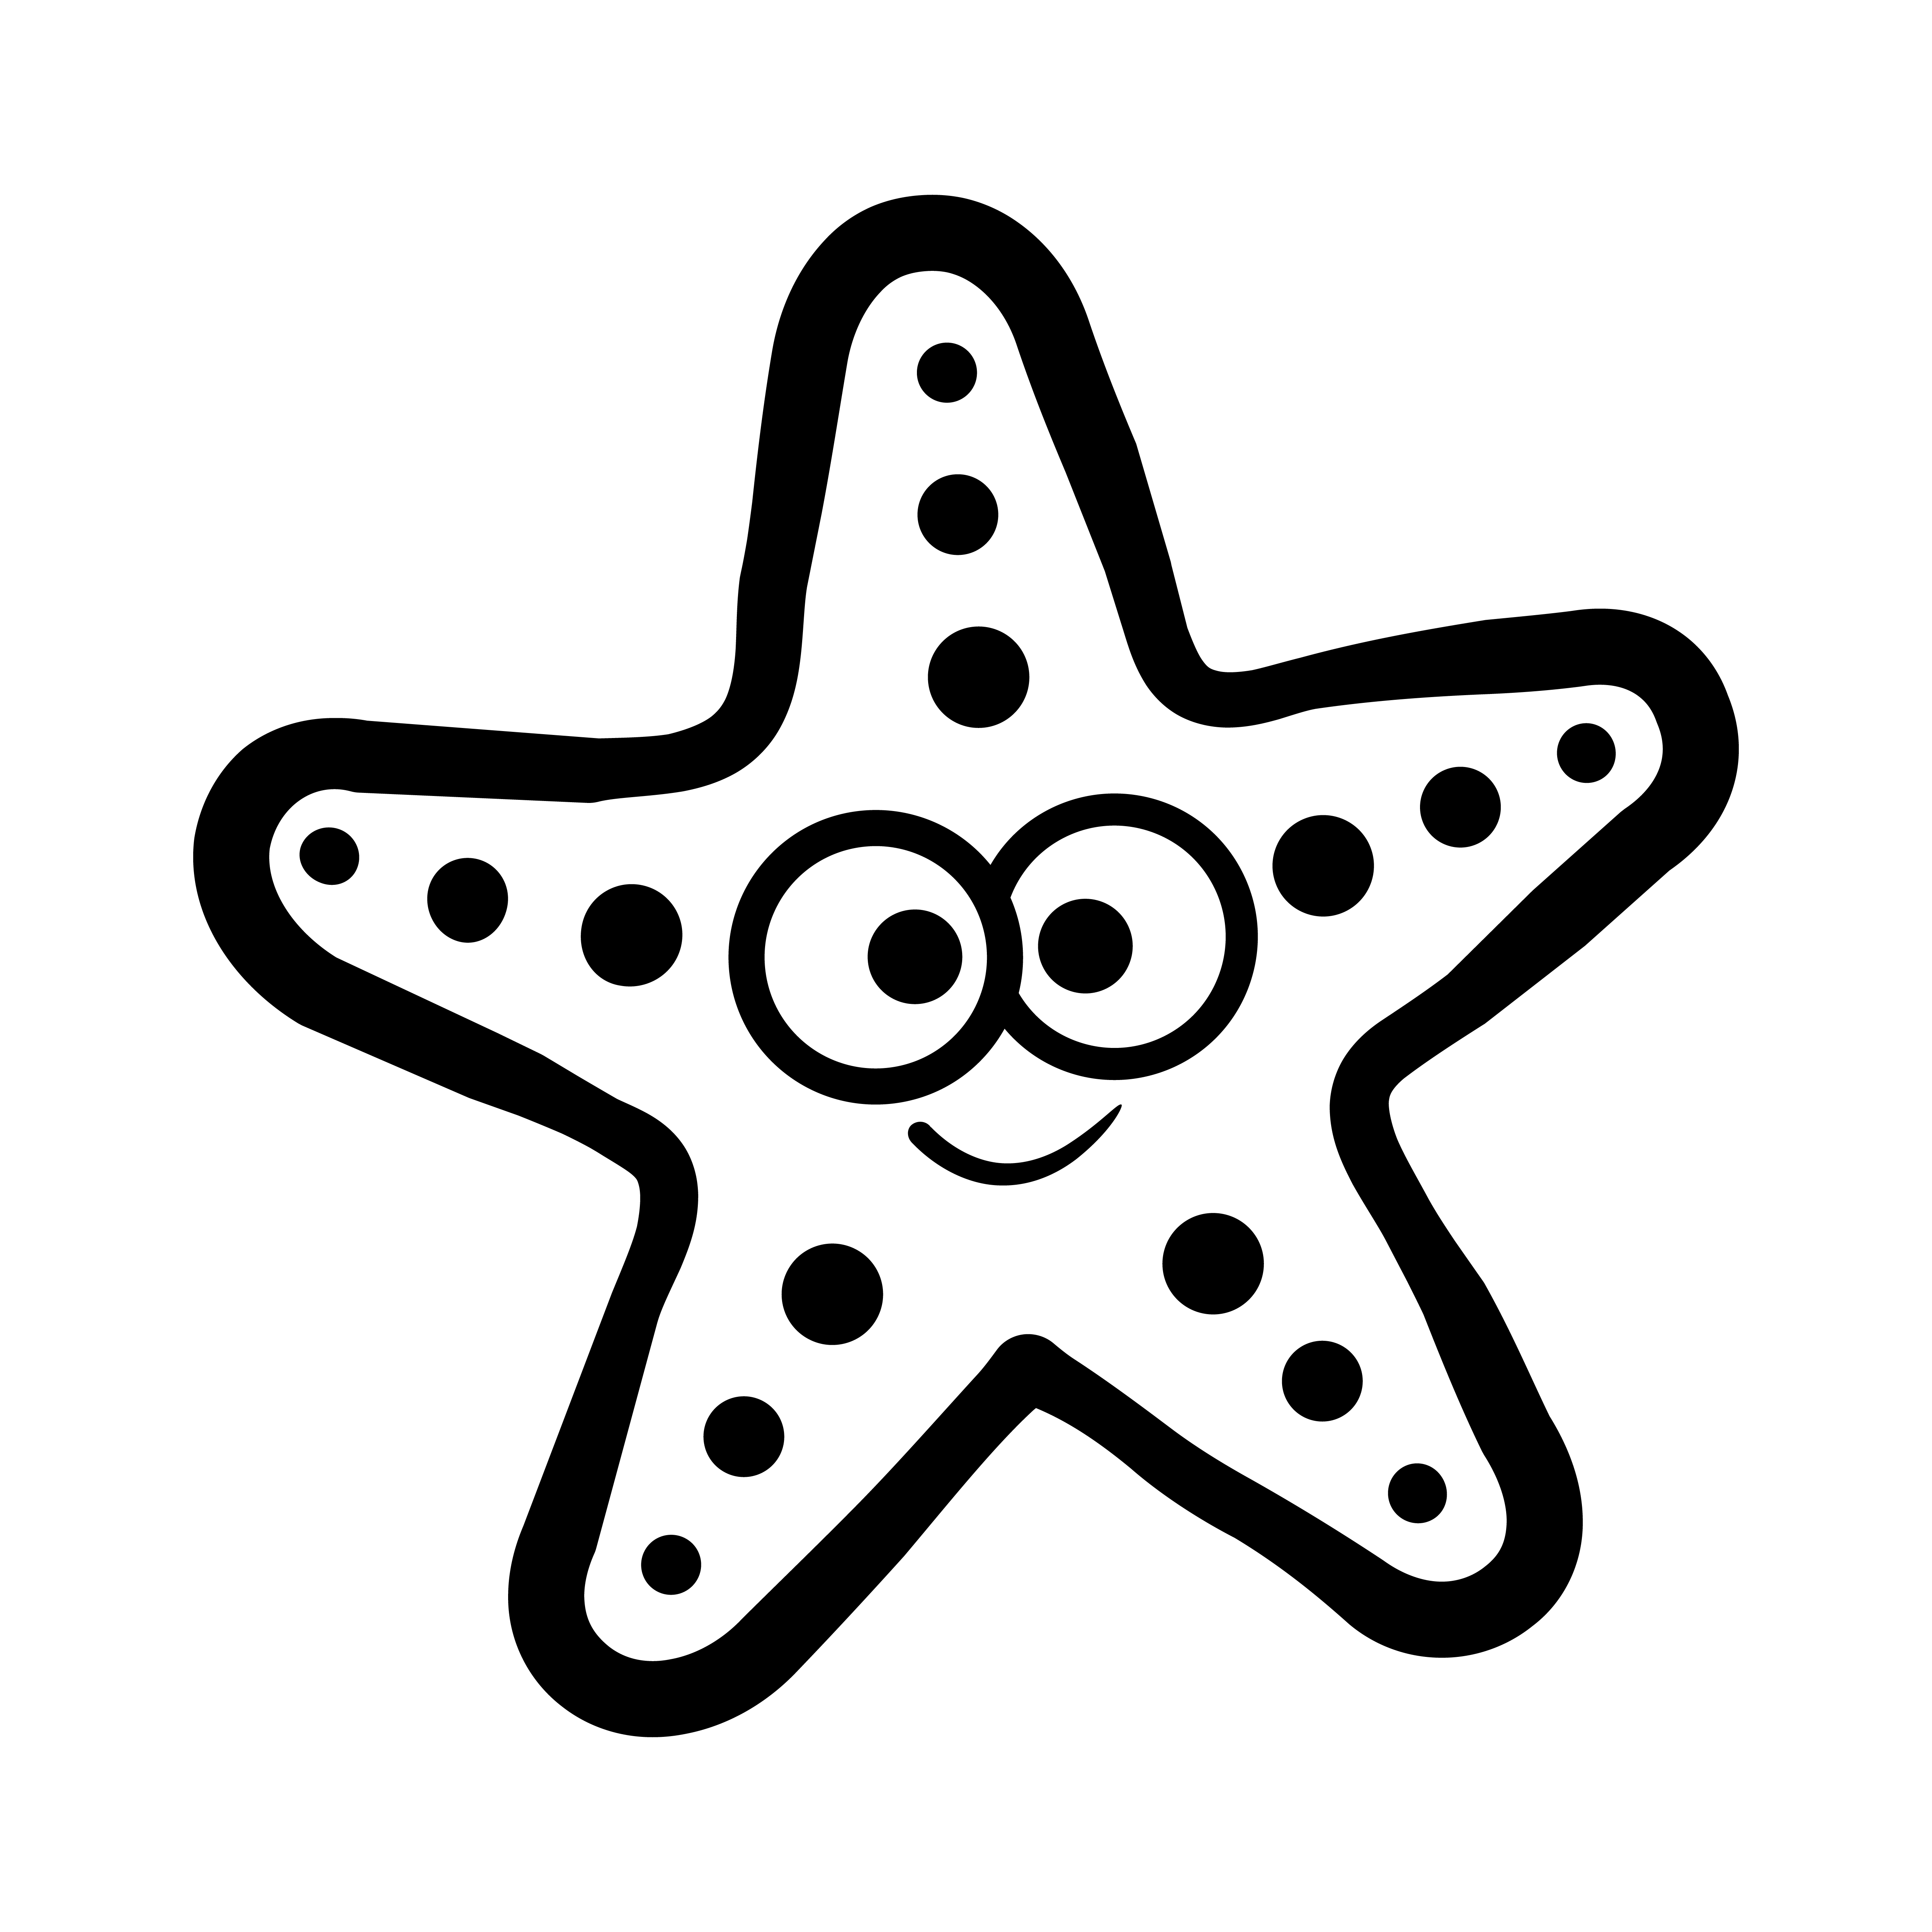 Download Starfish sea creature vector icon - Download Free Vectors ...